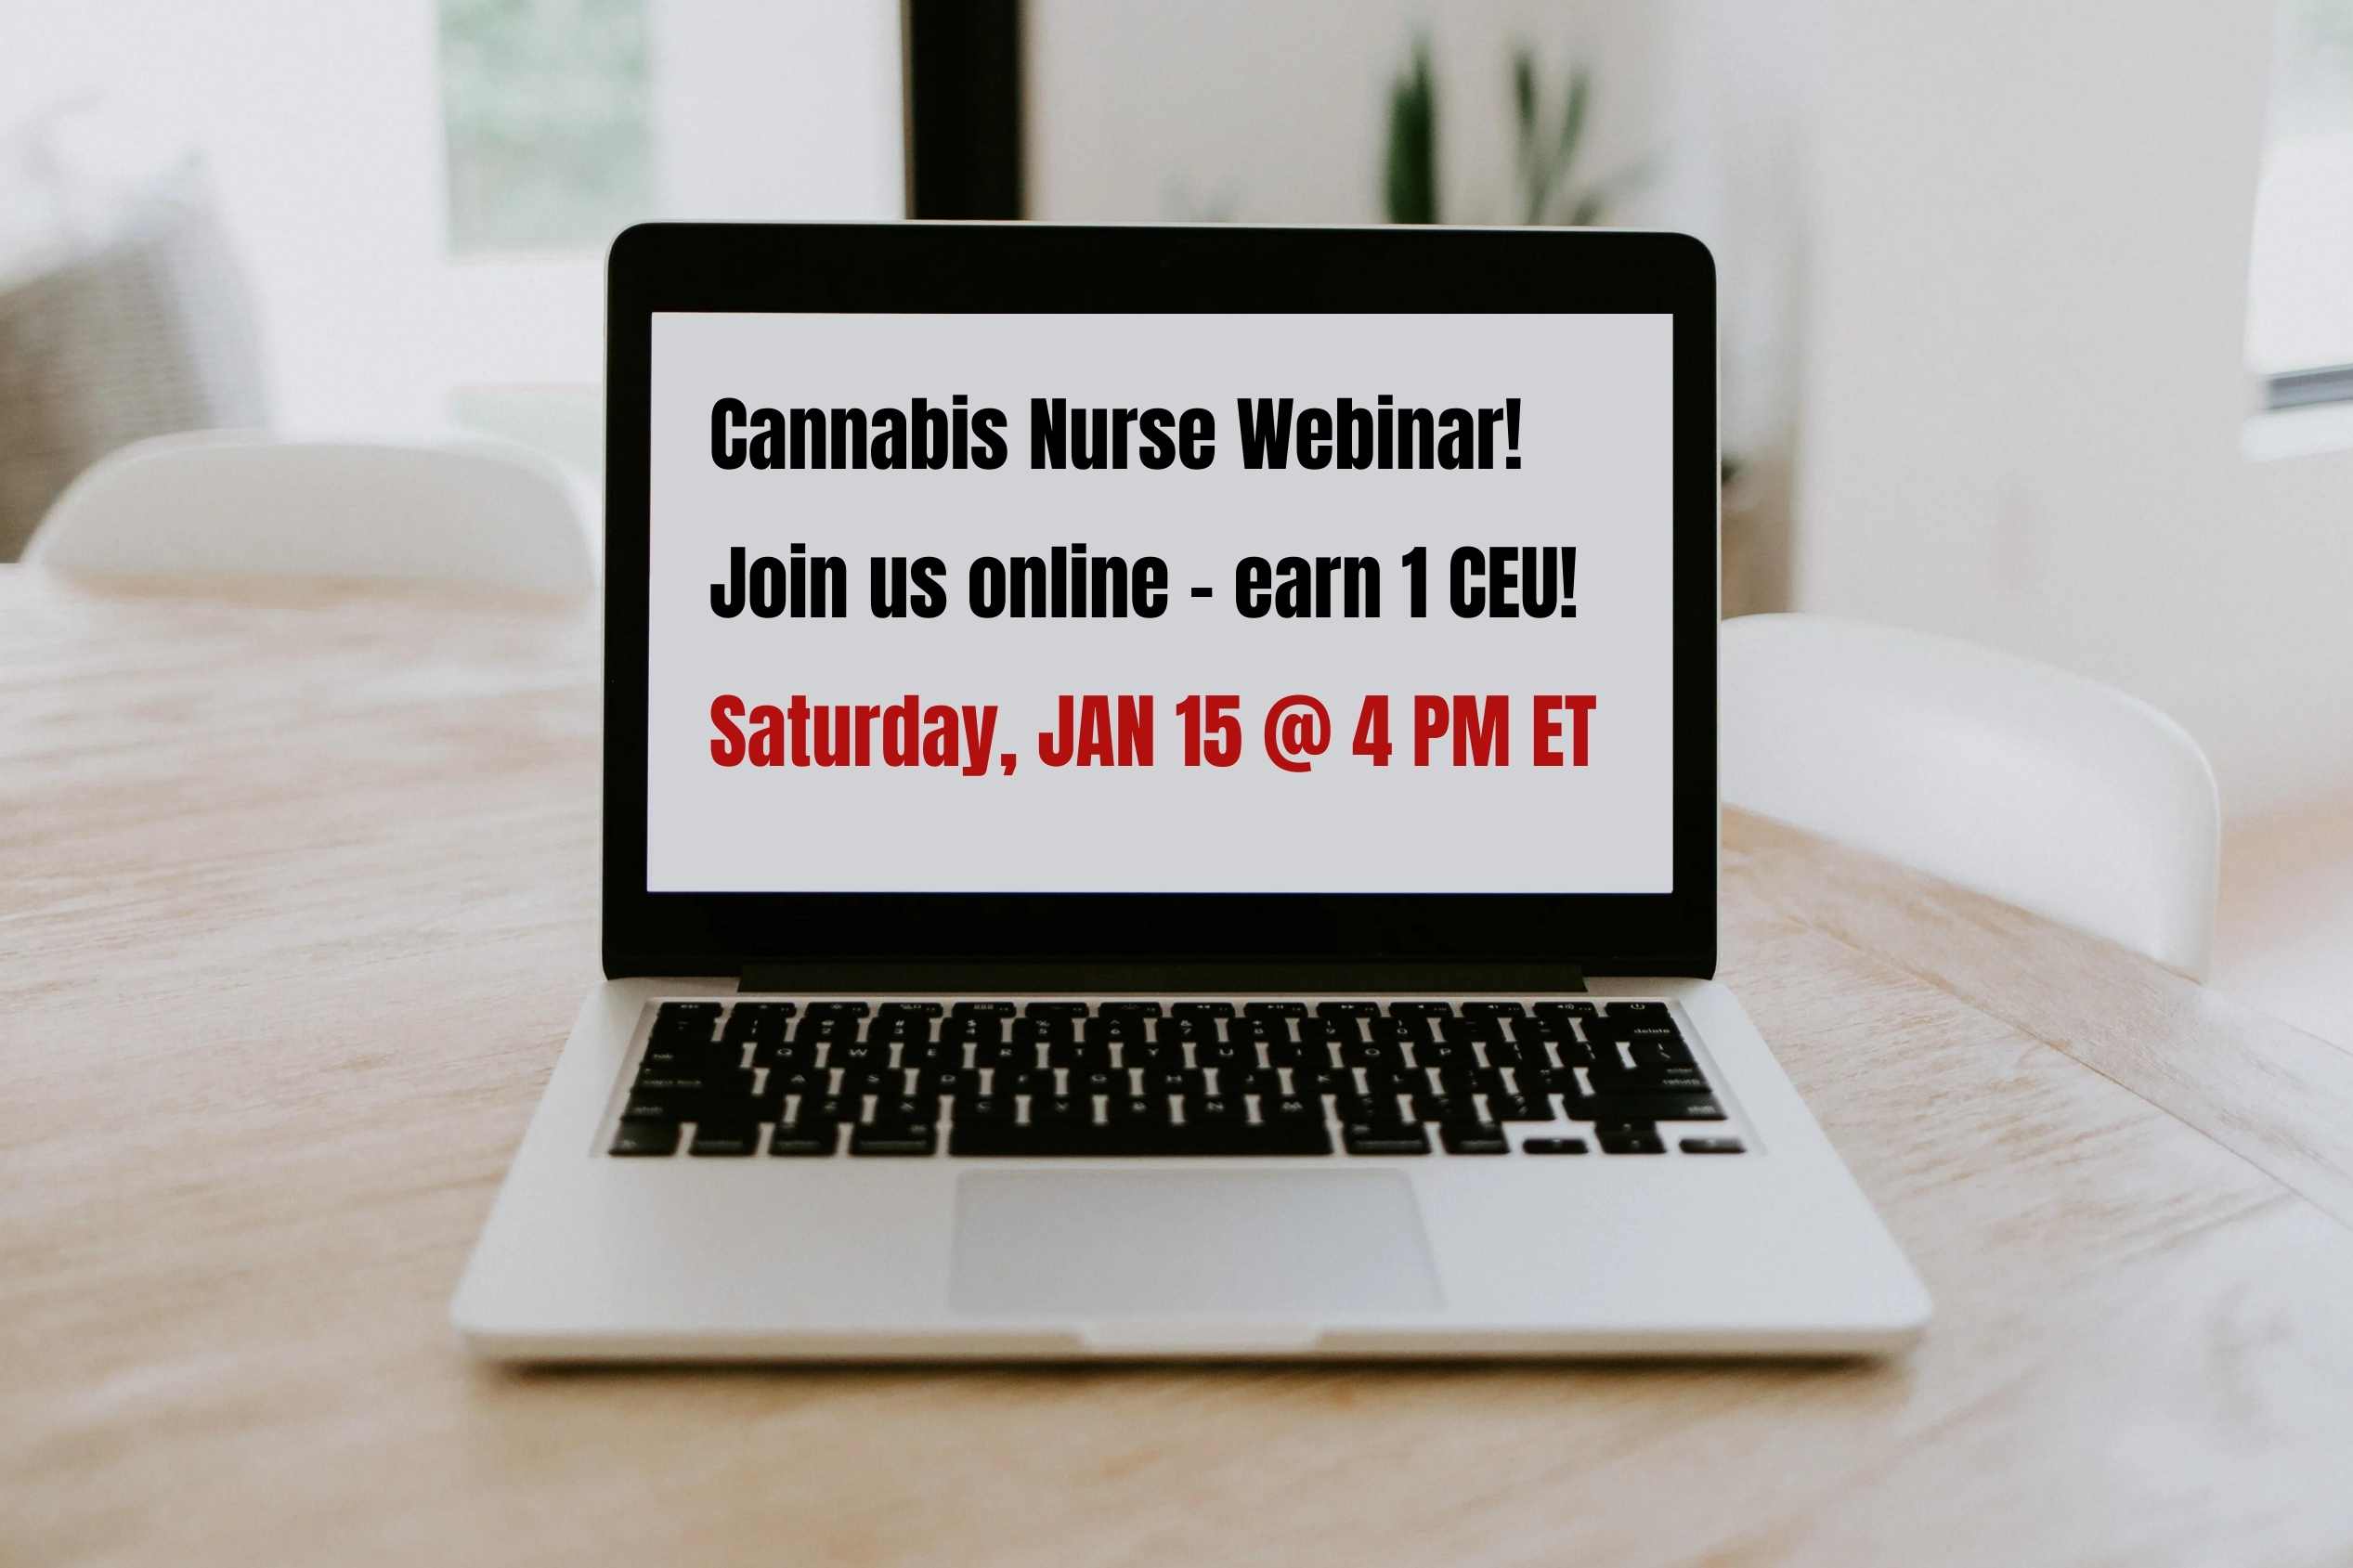 Cannabis Nurse Webinar! Join us online